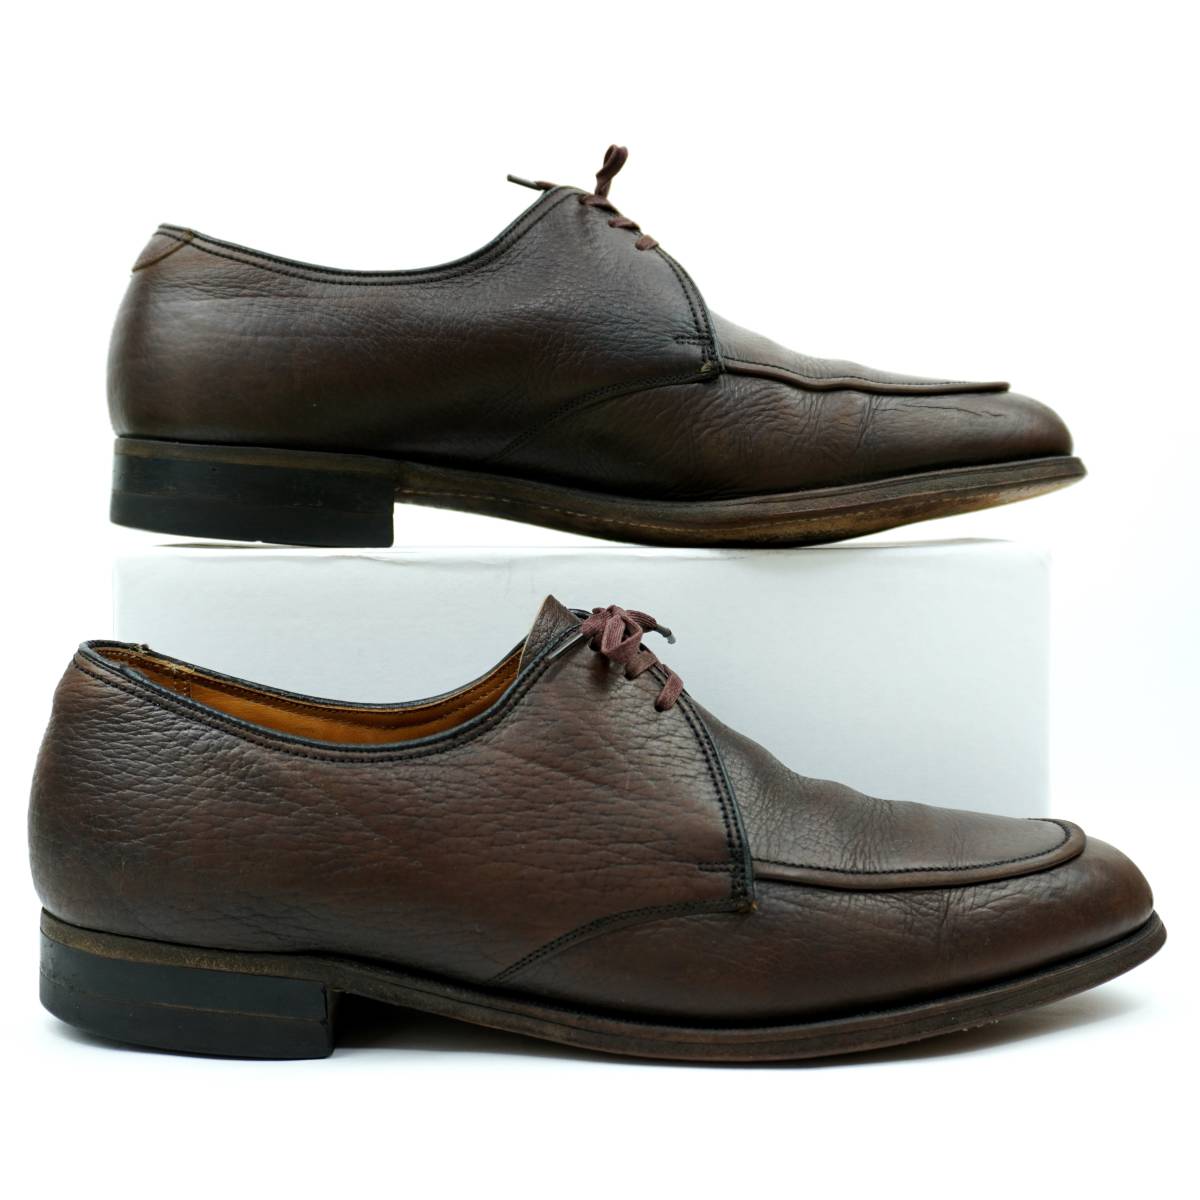 FLORSHEIM THE CHEVRON 1965s US9.0D Vintage フローシャイム シェブロン ユーチップ 革靴 1960年代 ヴィンテージ 27.0cm 古靴_画像4